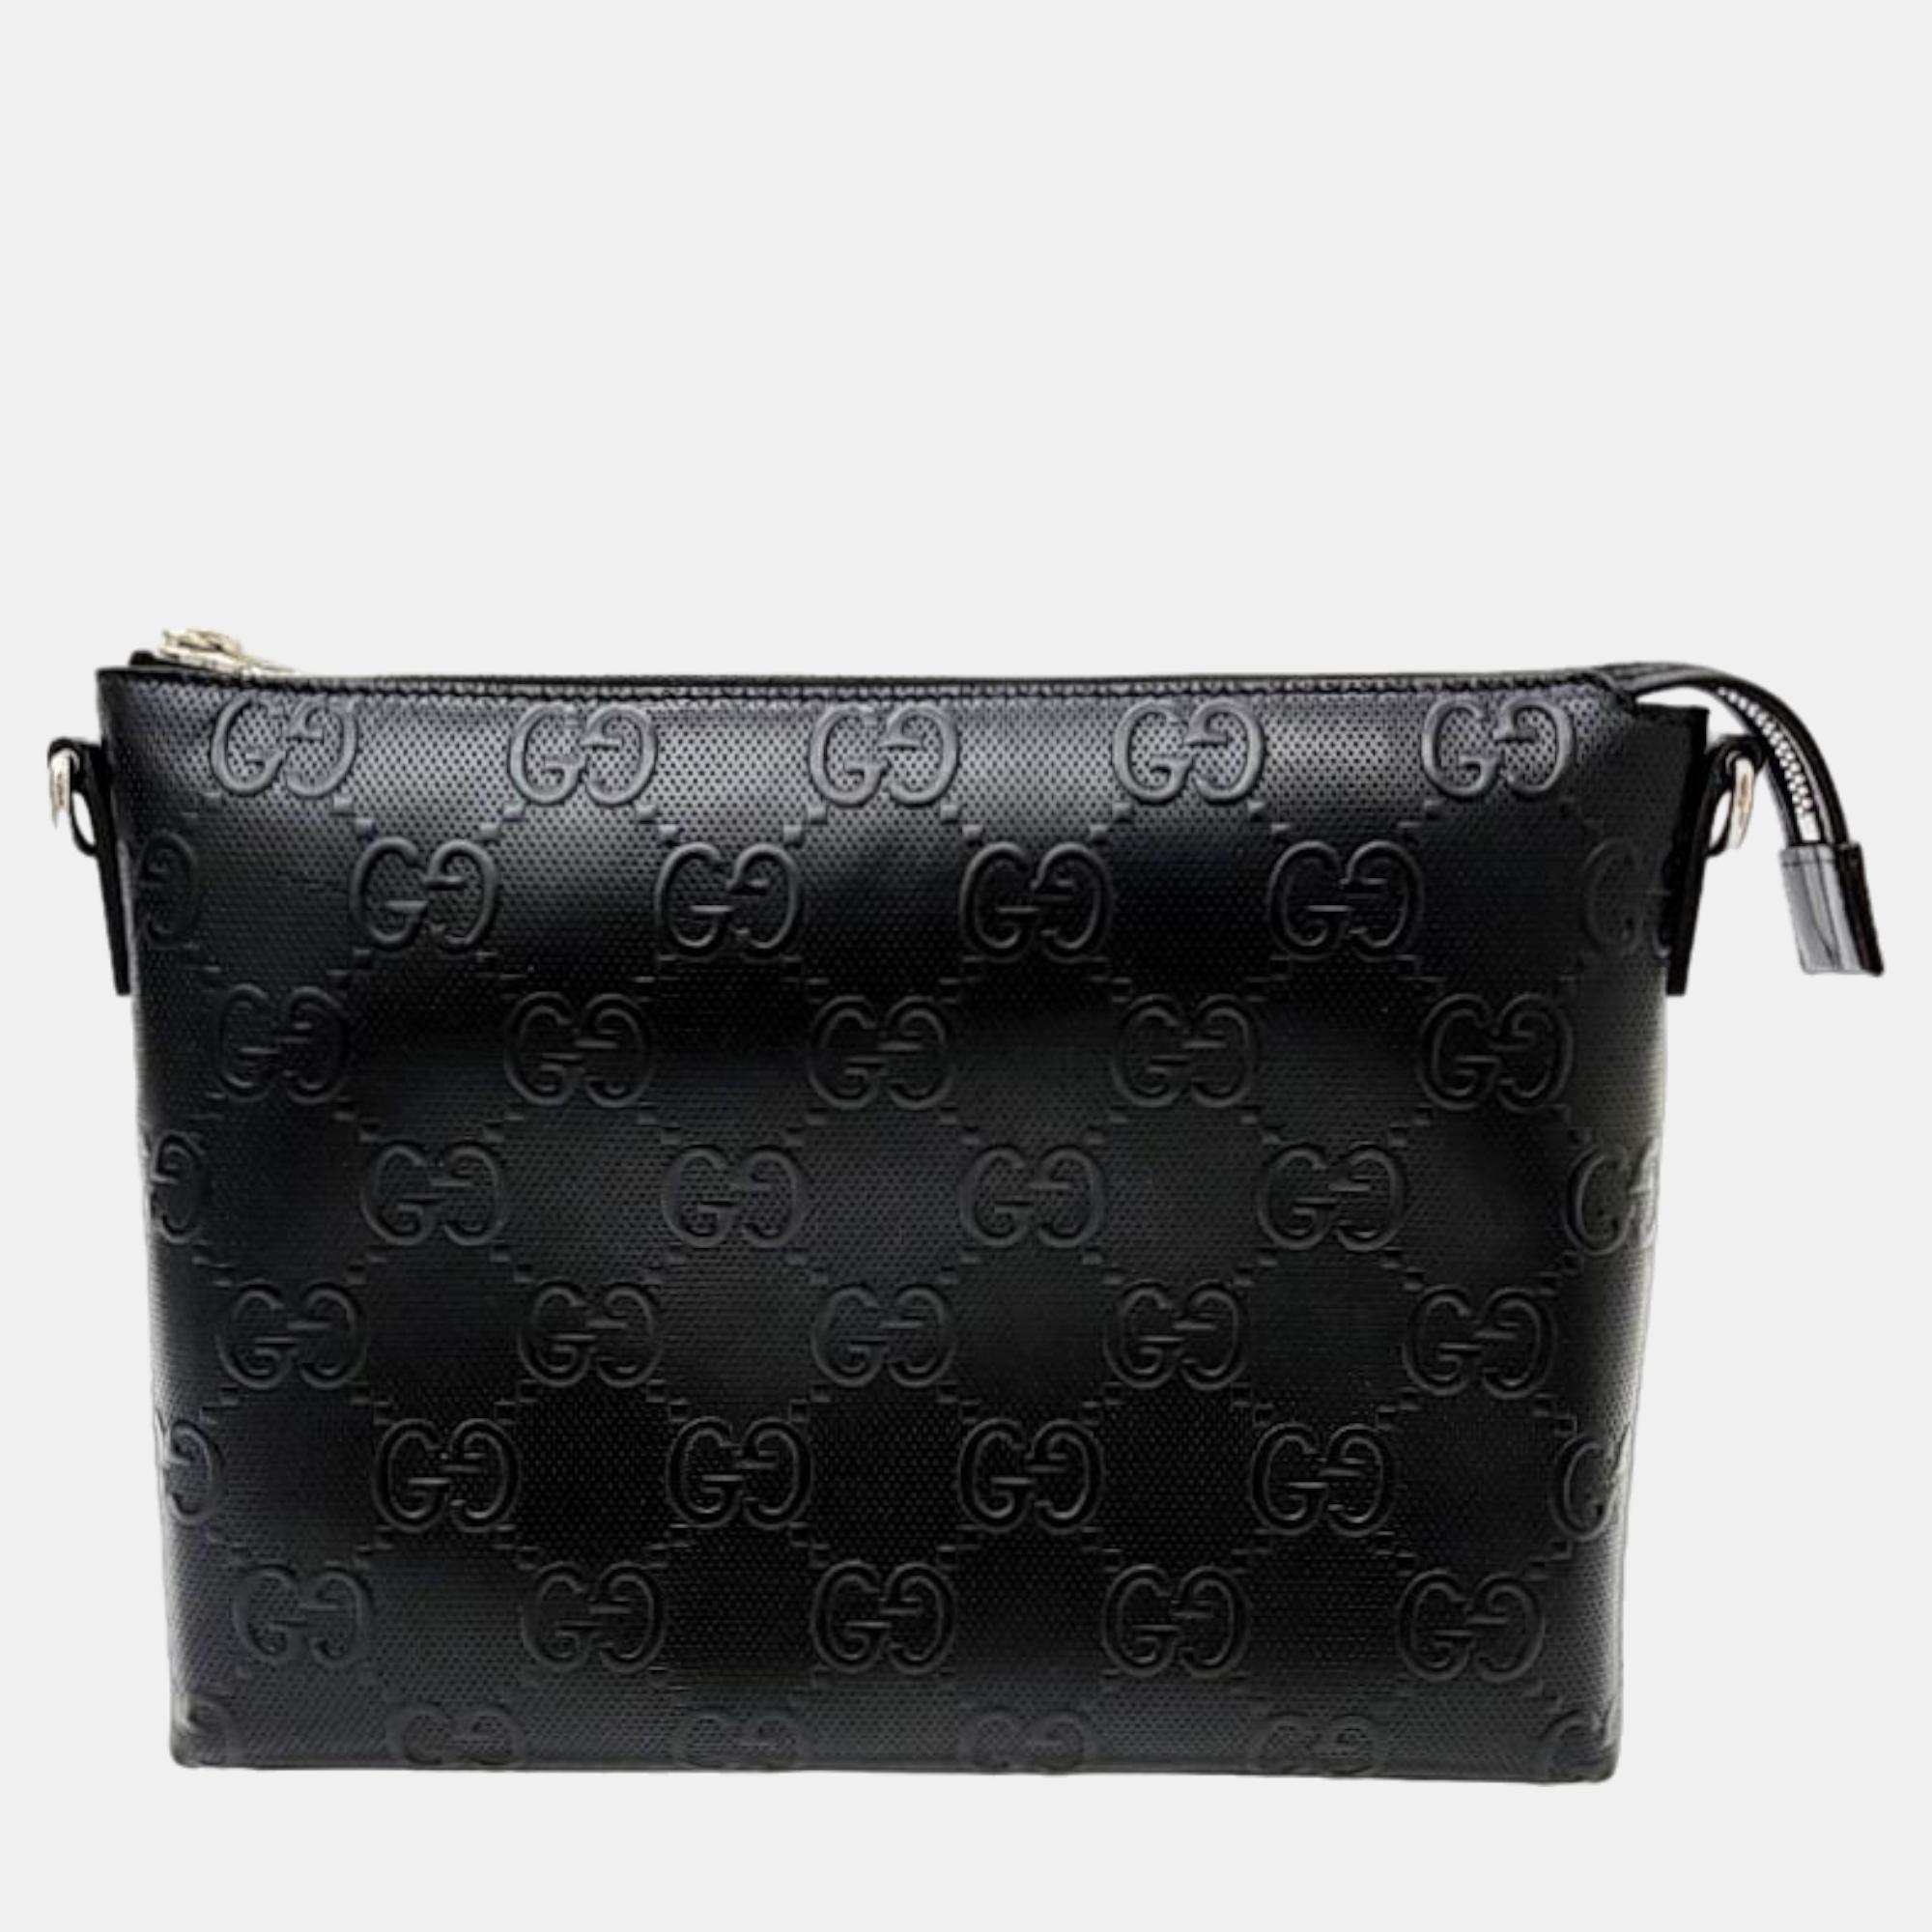 Gucci Emboss Clutch And Shoulder Bag (696009)